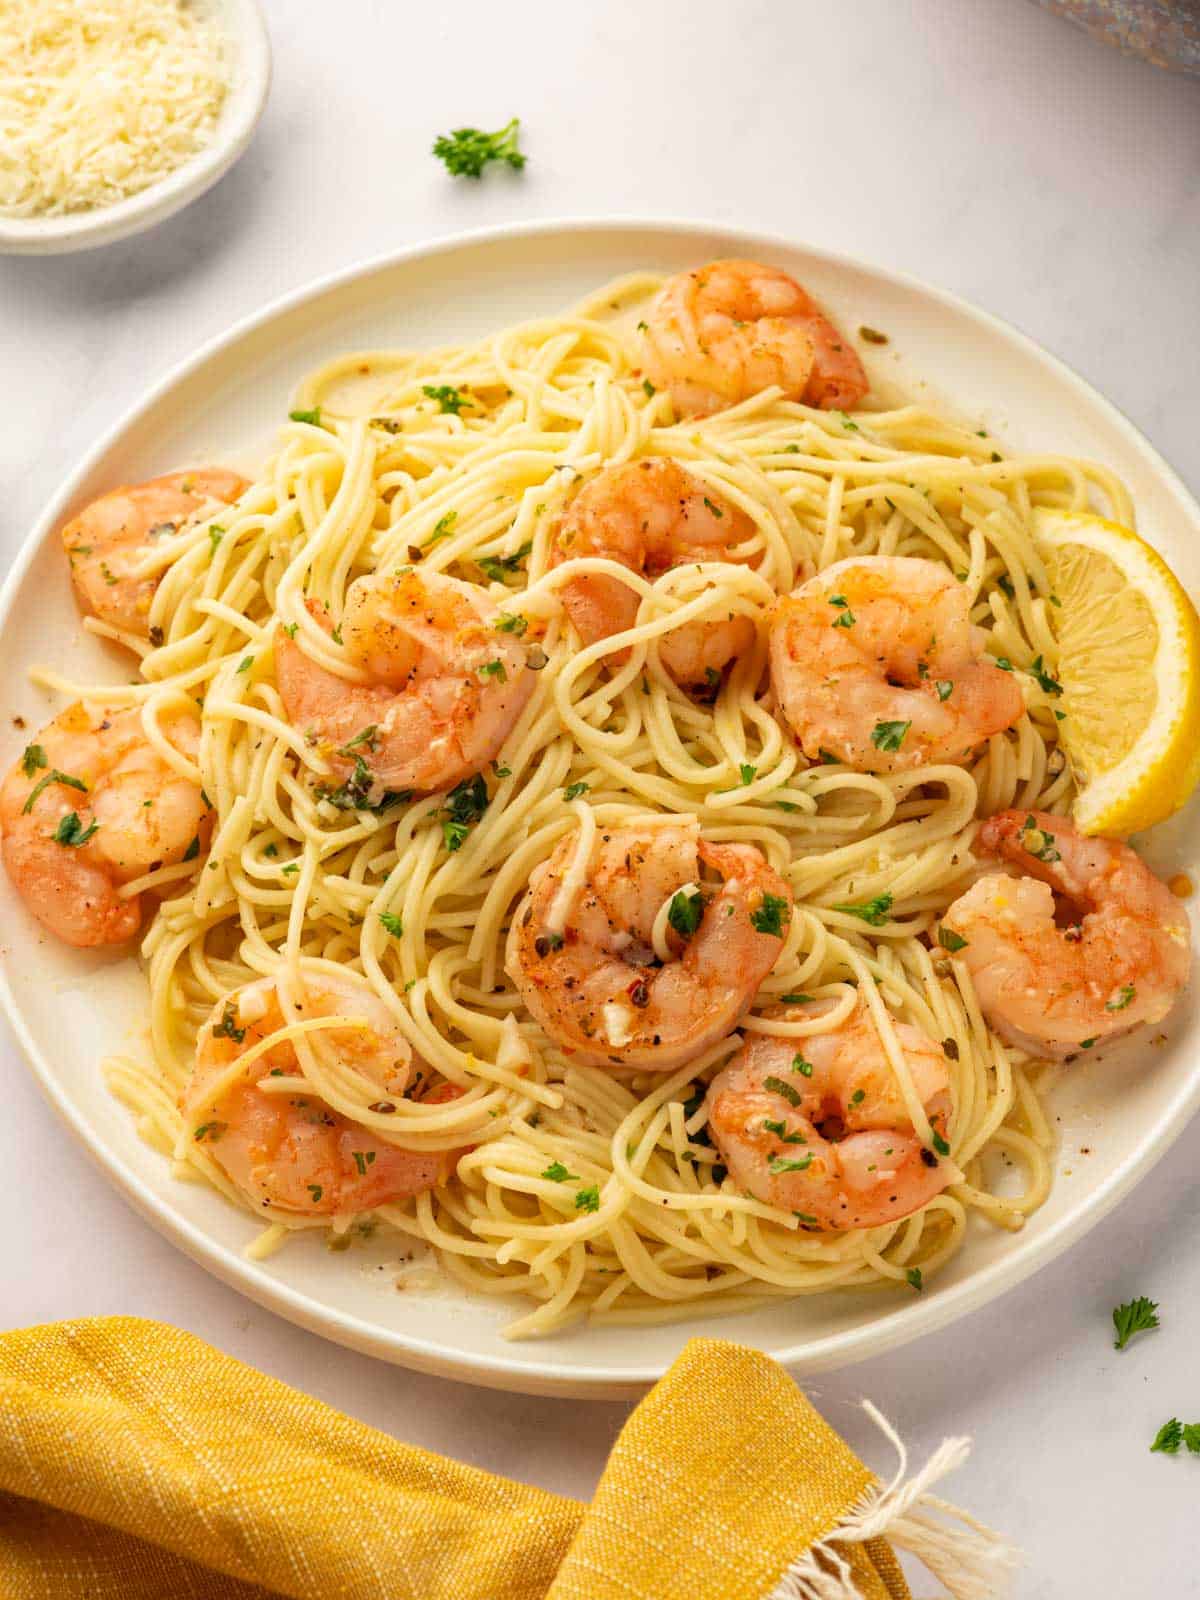 A platter of shrimp scampi pasta.